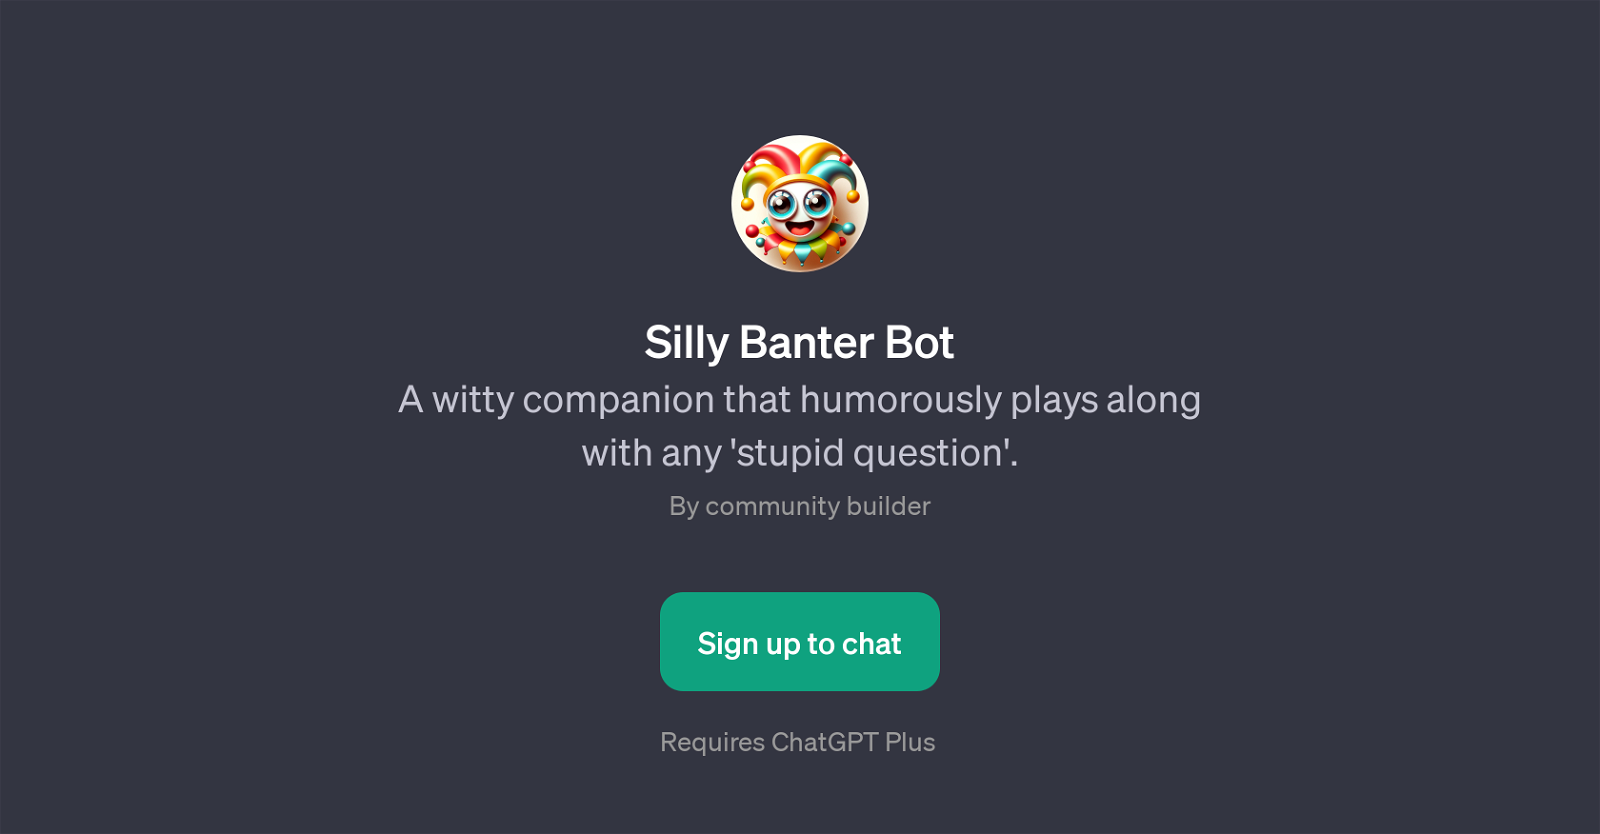 Silly Banter Bot website